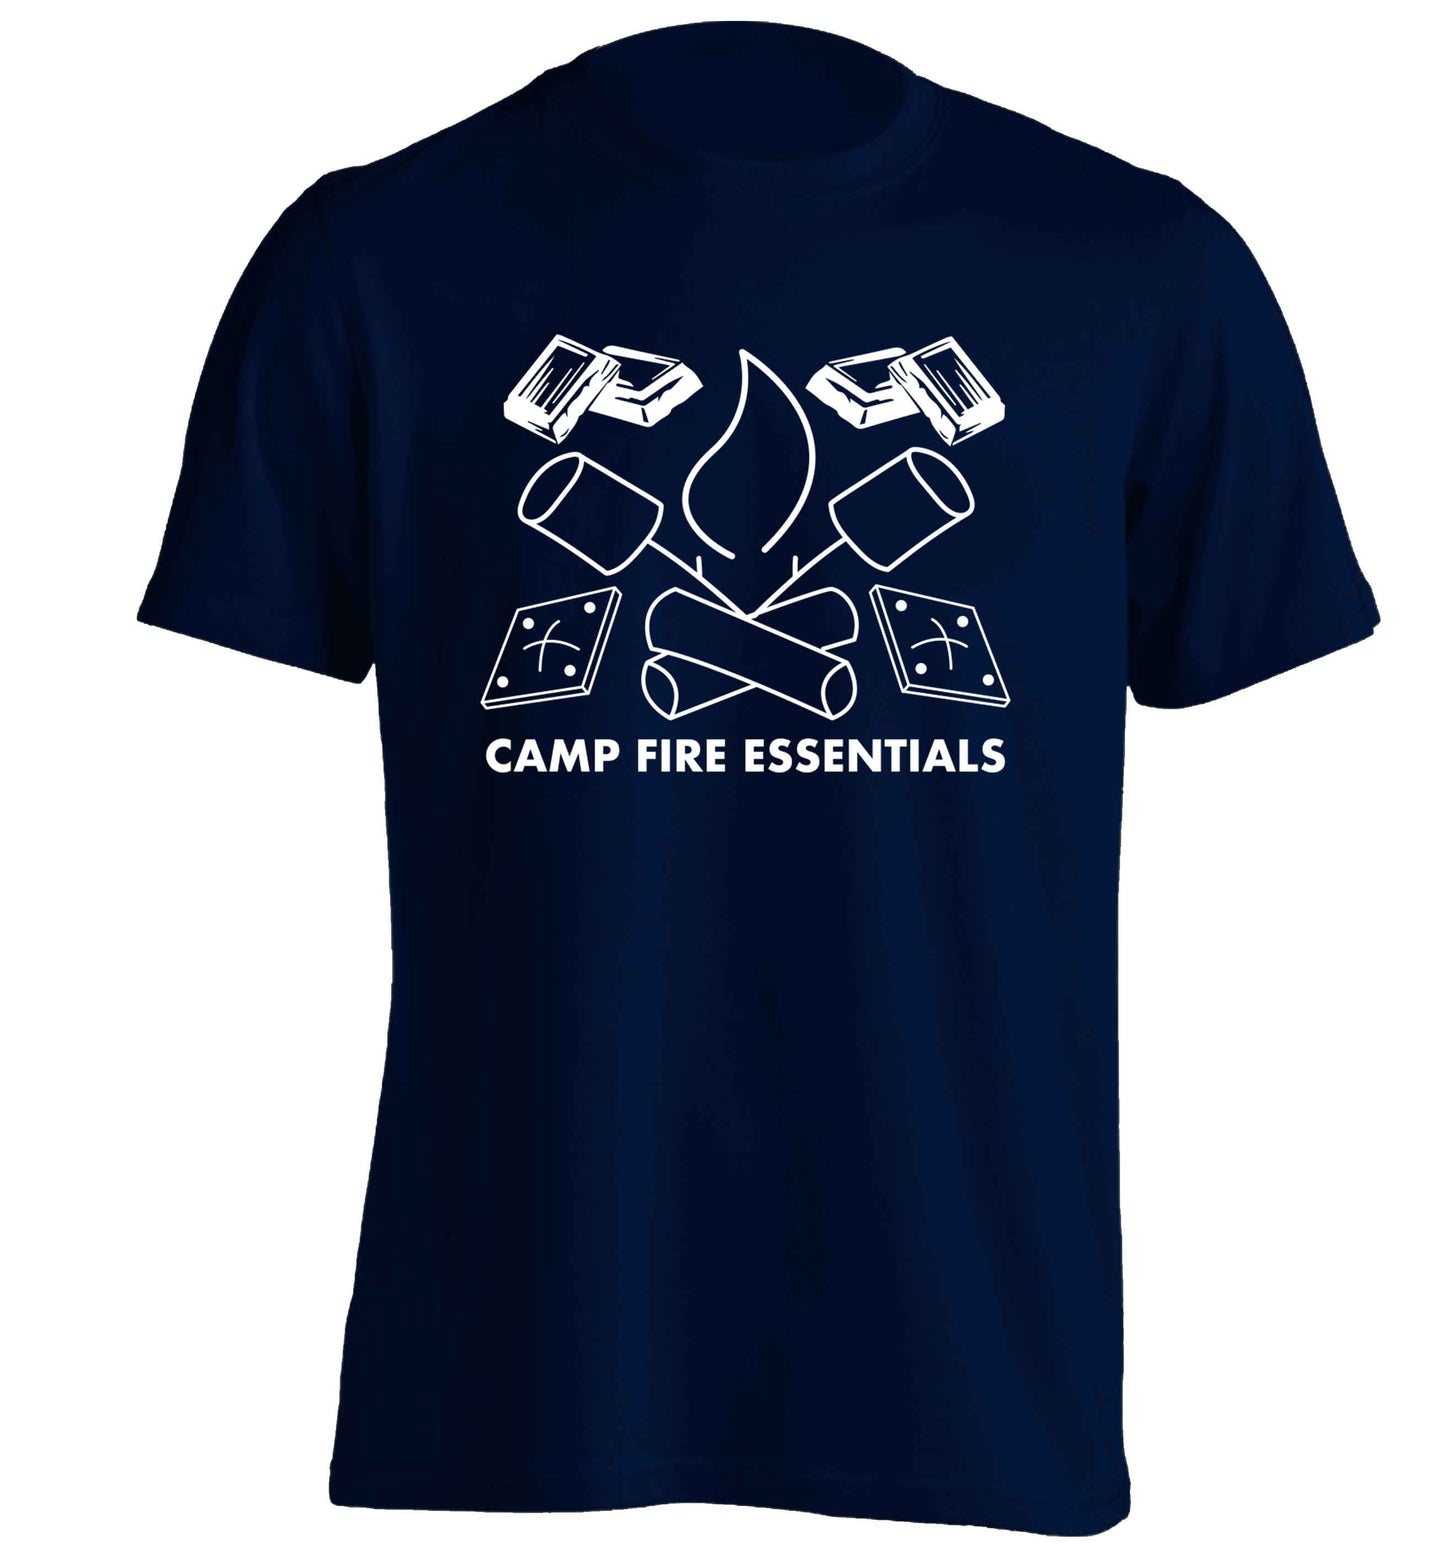 Campfire essentials adults unisex navy Tshirt 2XL